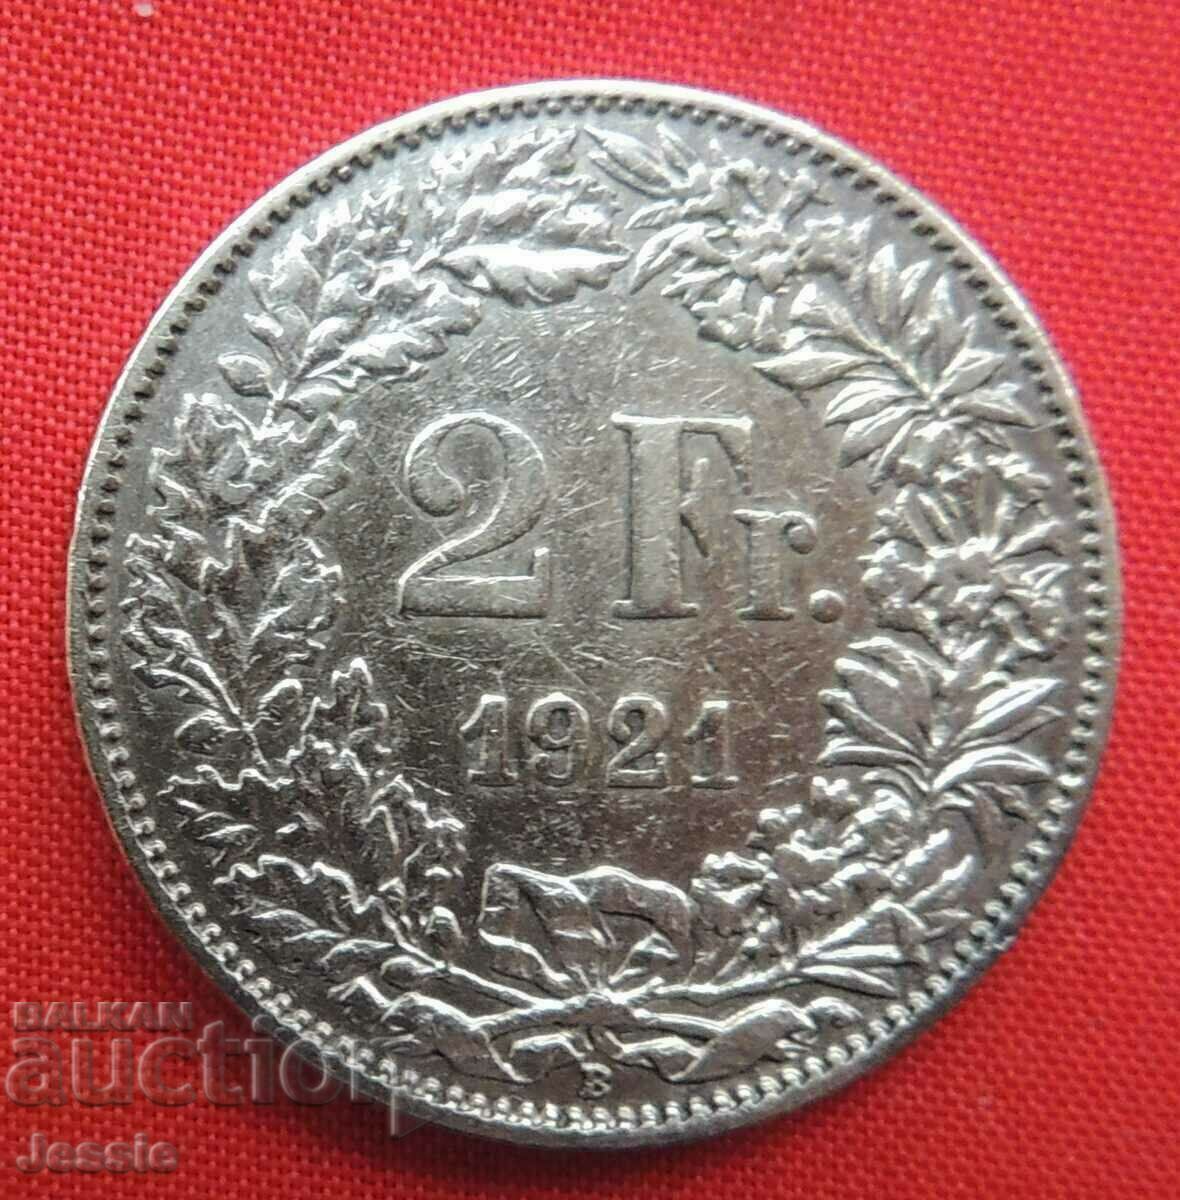 2 Francs 1921 B Switzerland Silver